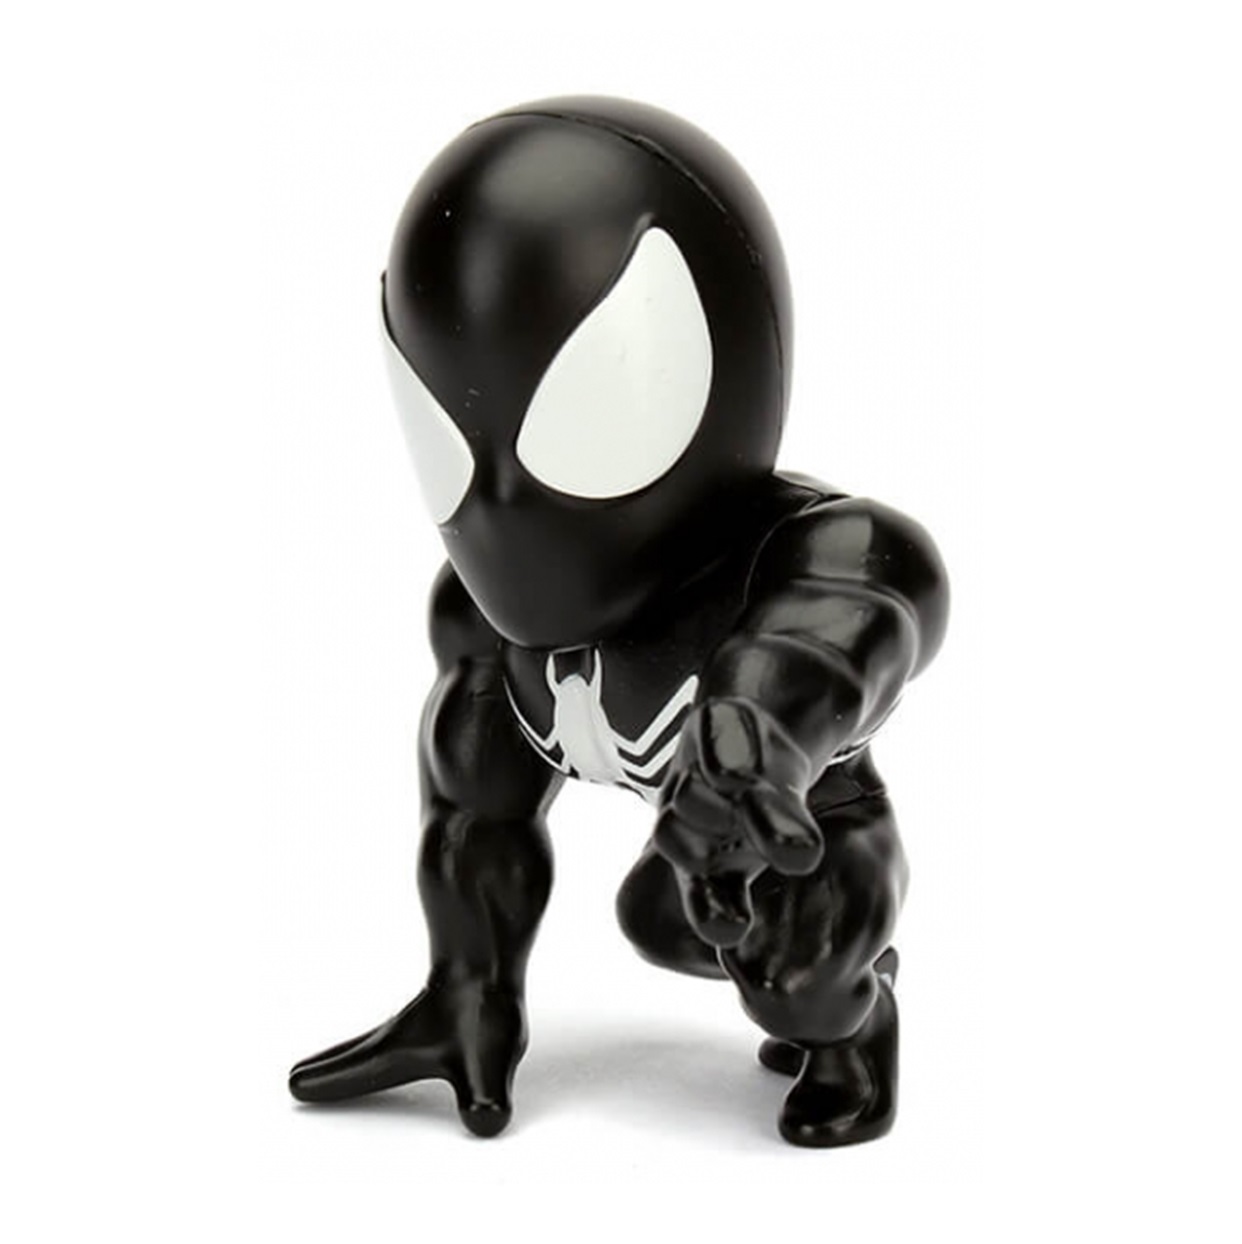 Black Suit Spider Man M253 Figura Marvel Metal Die Cast 